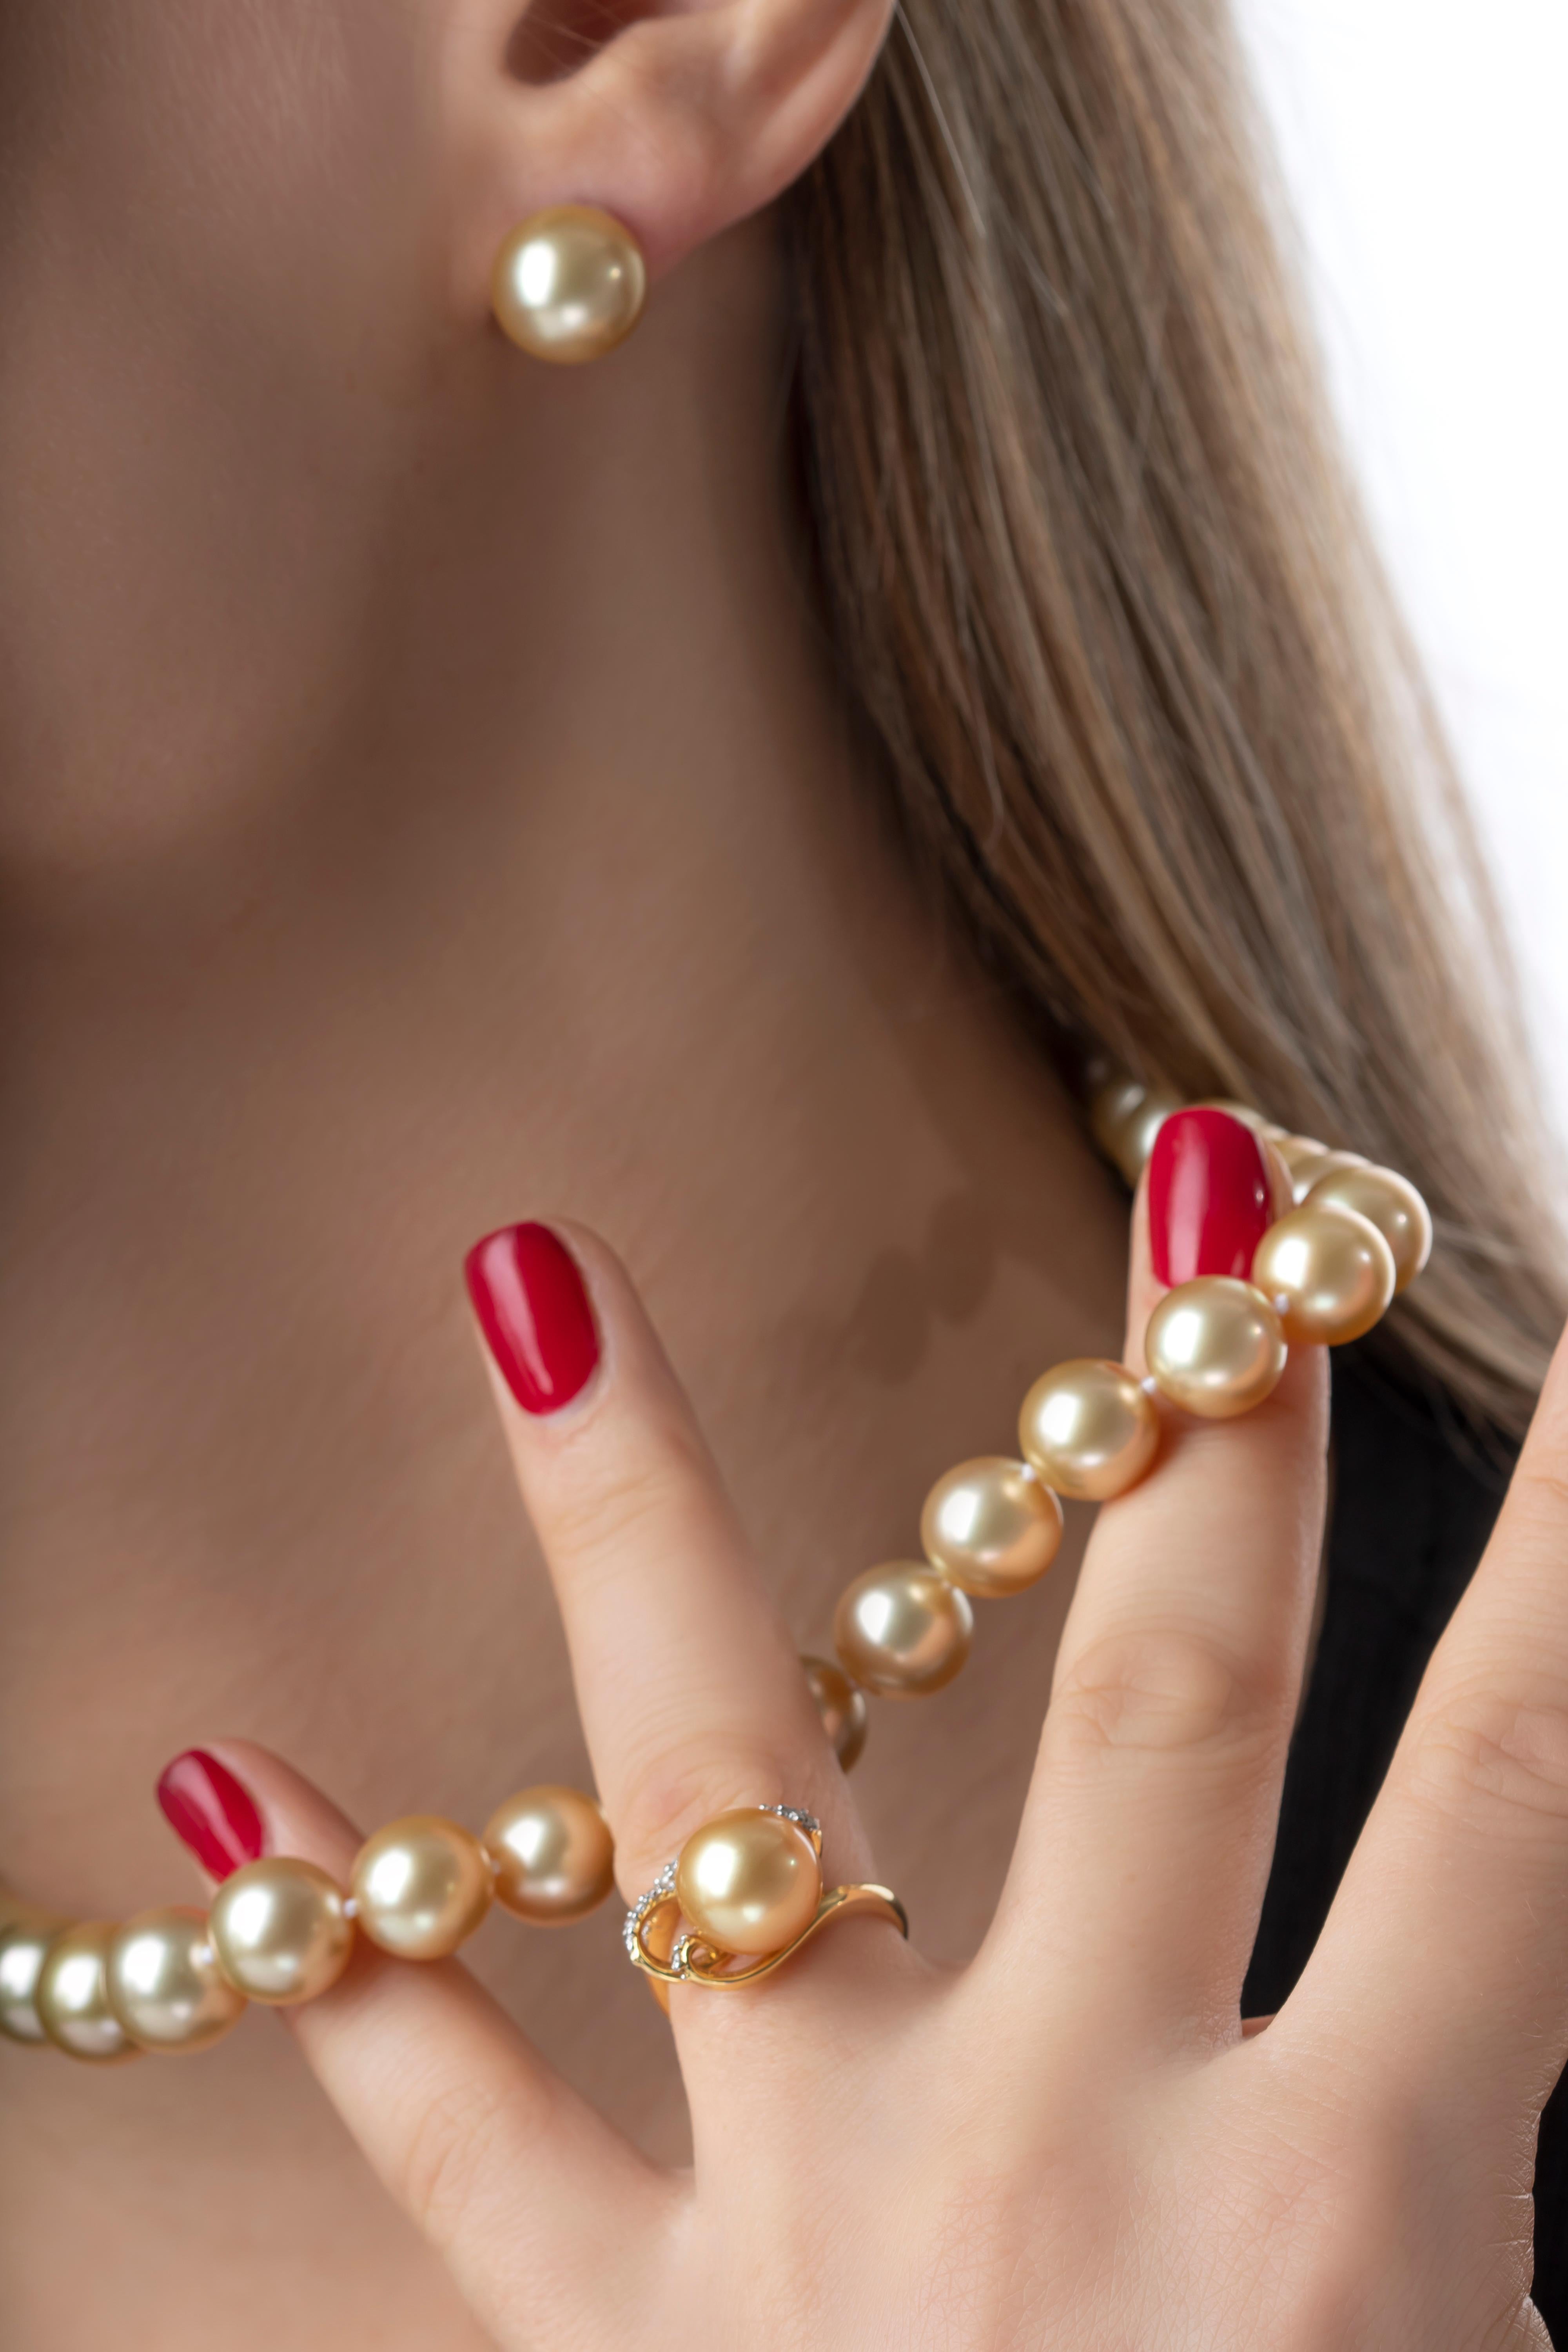 Contemporary Yoko London Golden South Sea Pearl Stud Earrings Set in 18 Karat White Gold